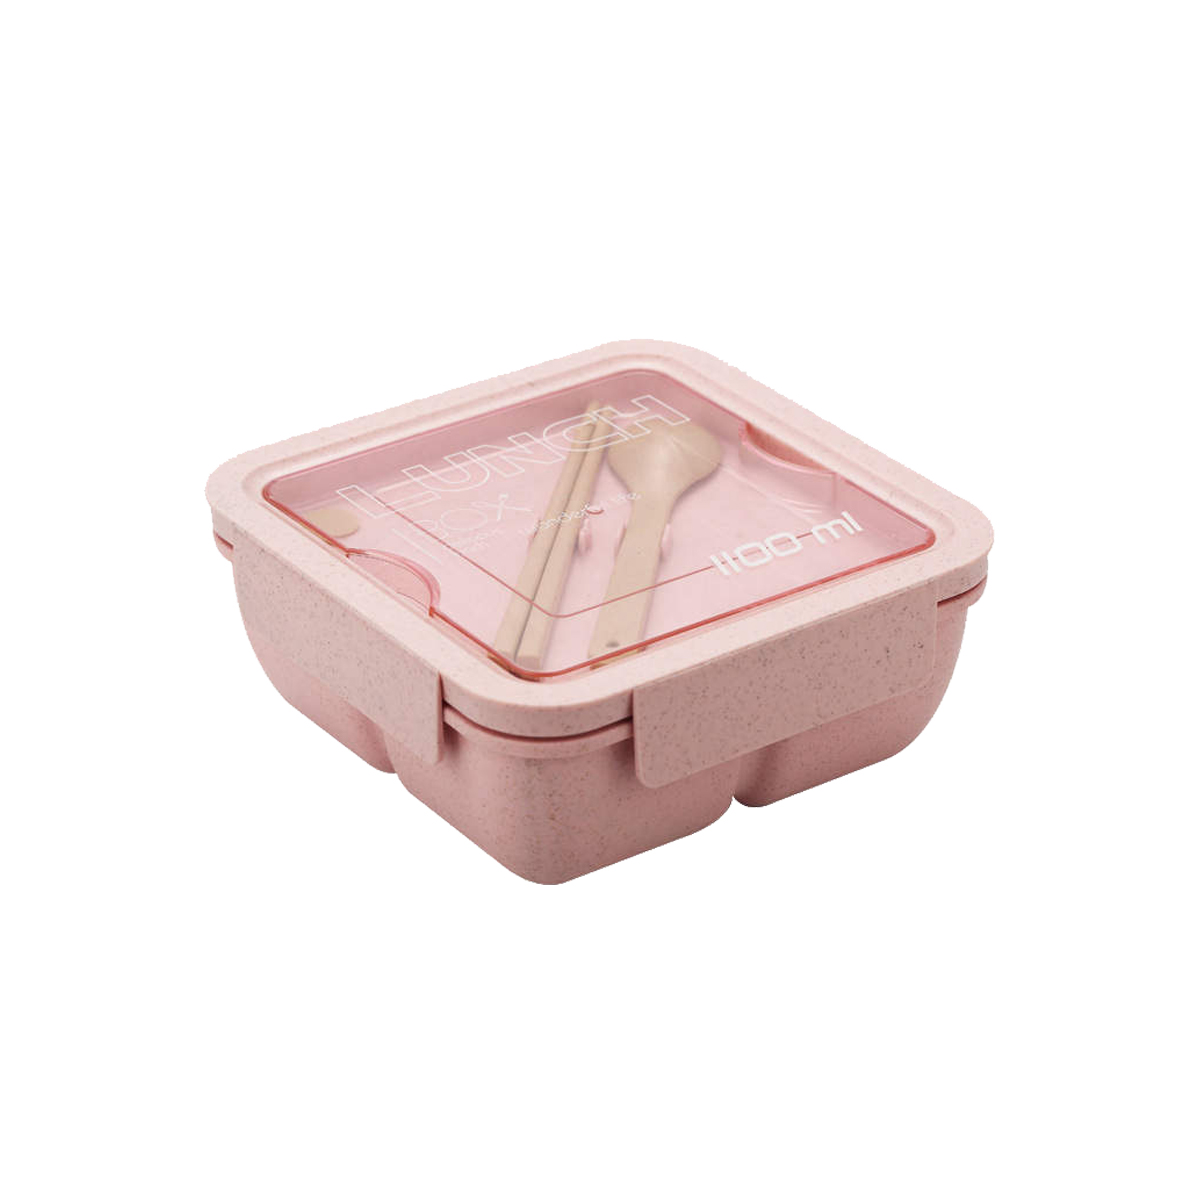 50468-01-Bento-Lunchbox